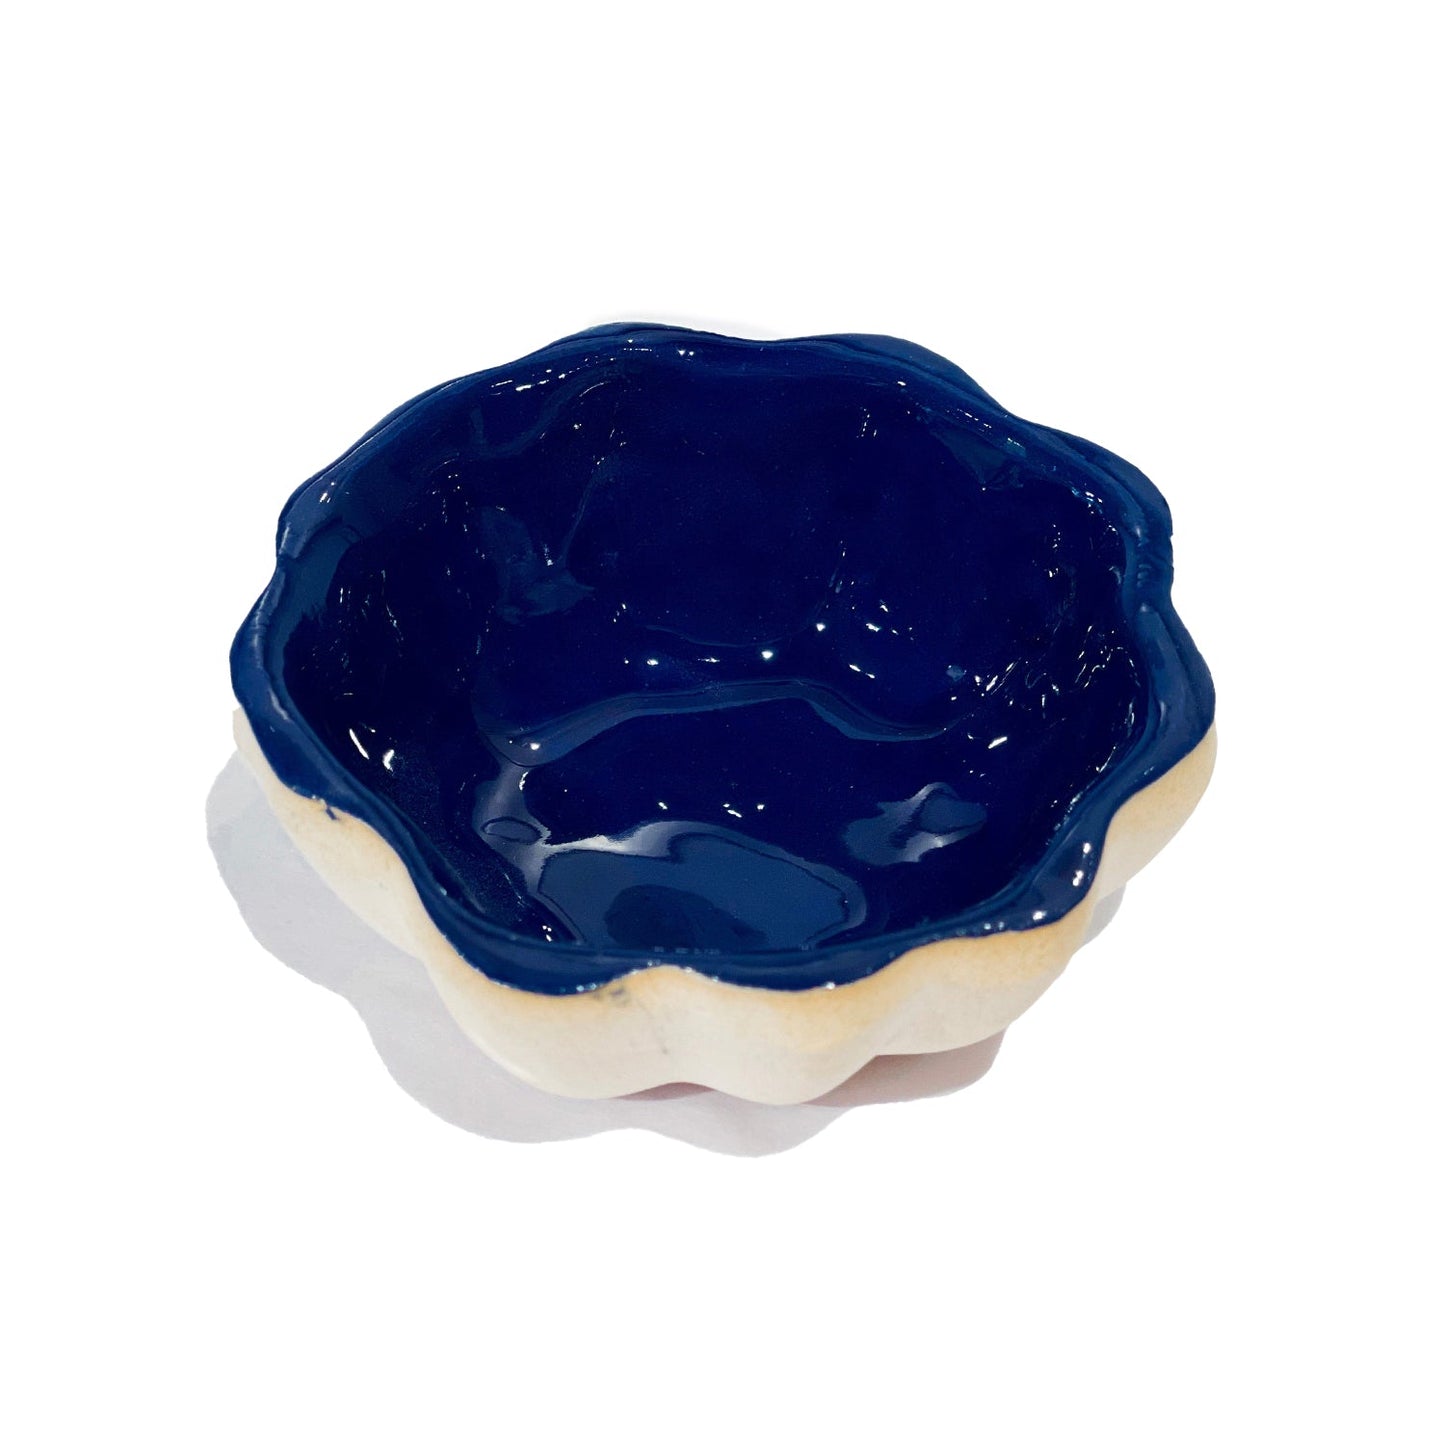 Terrafirma Ceramics - Mini Scallop Bowl